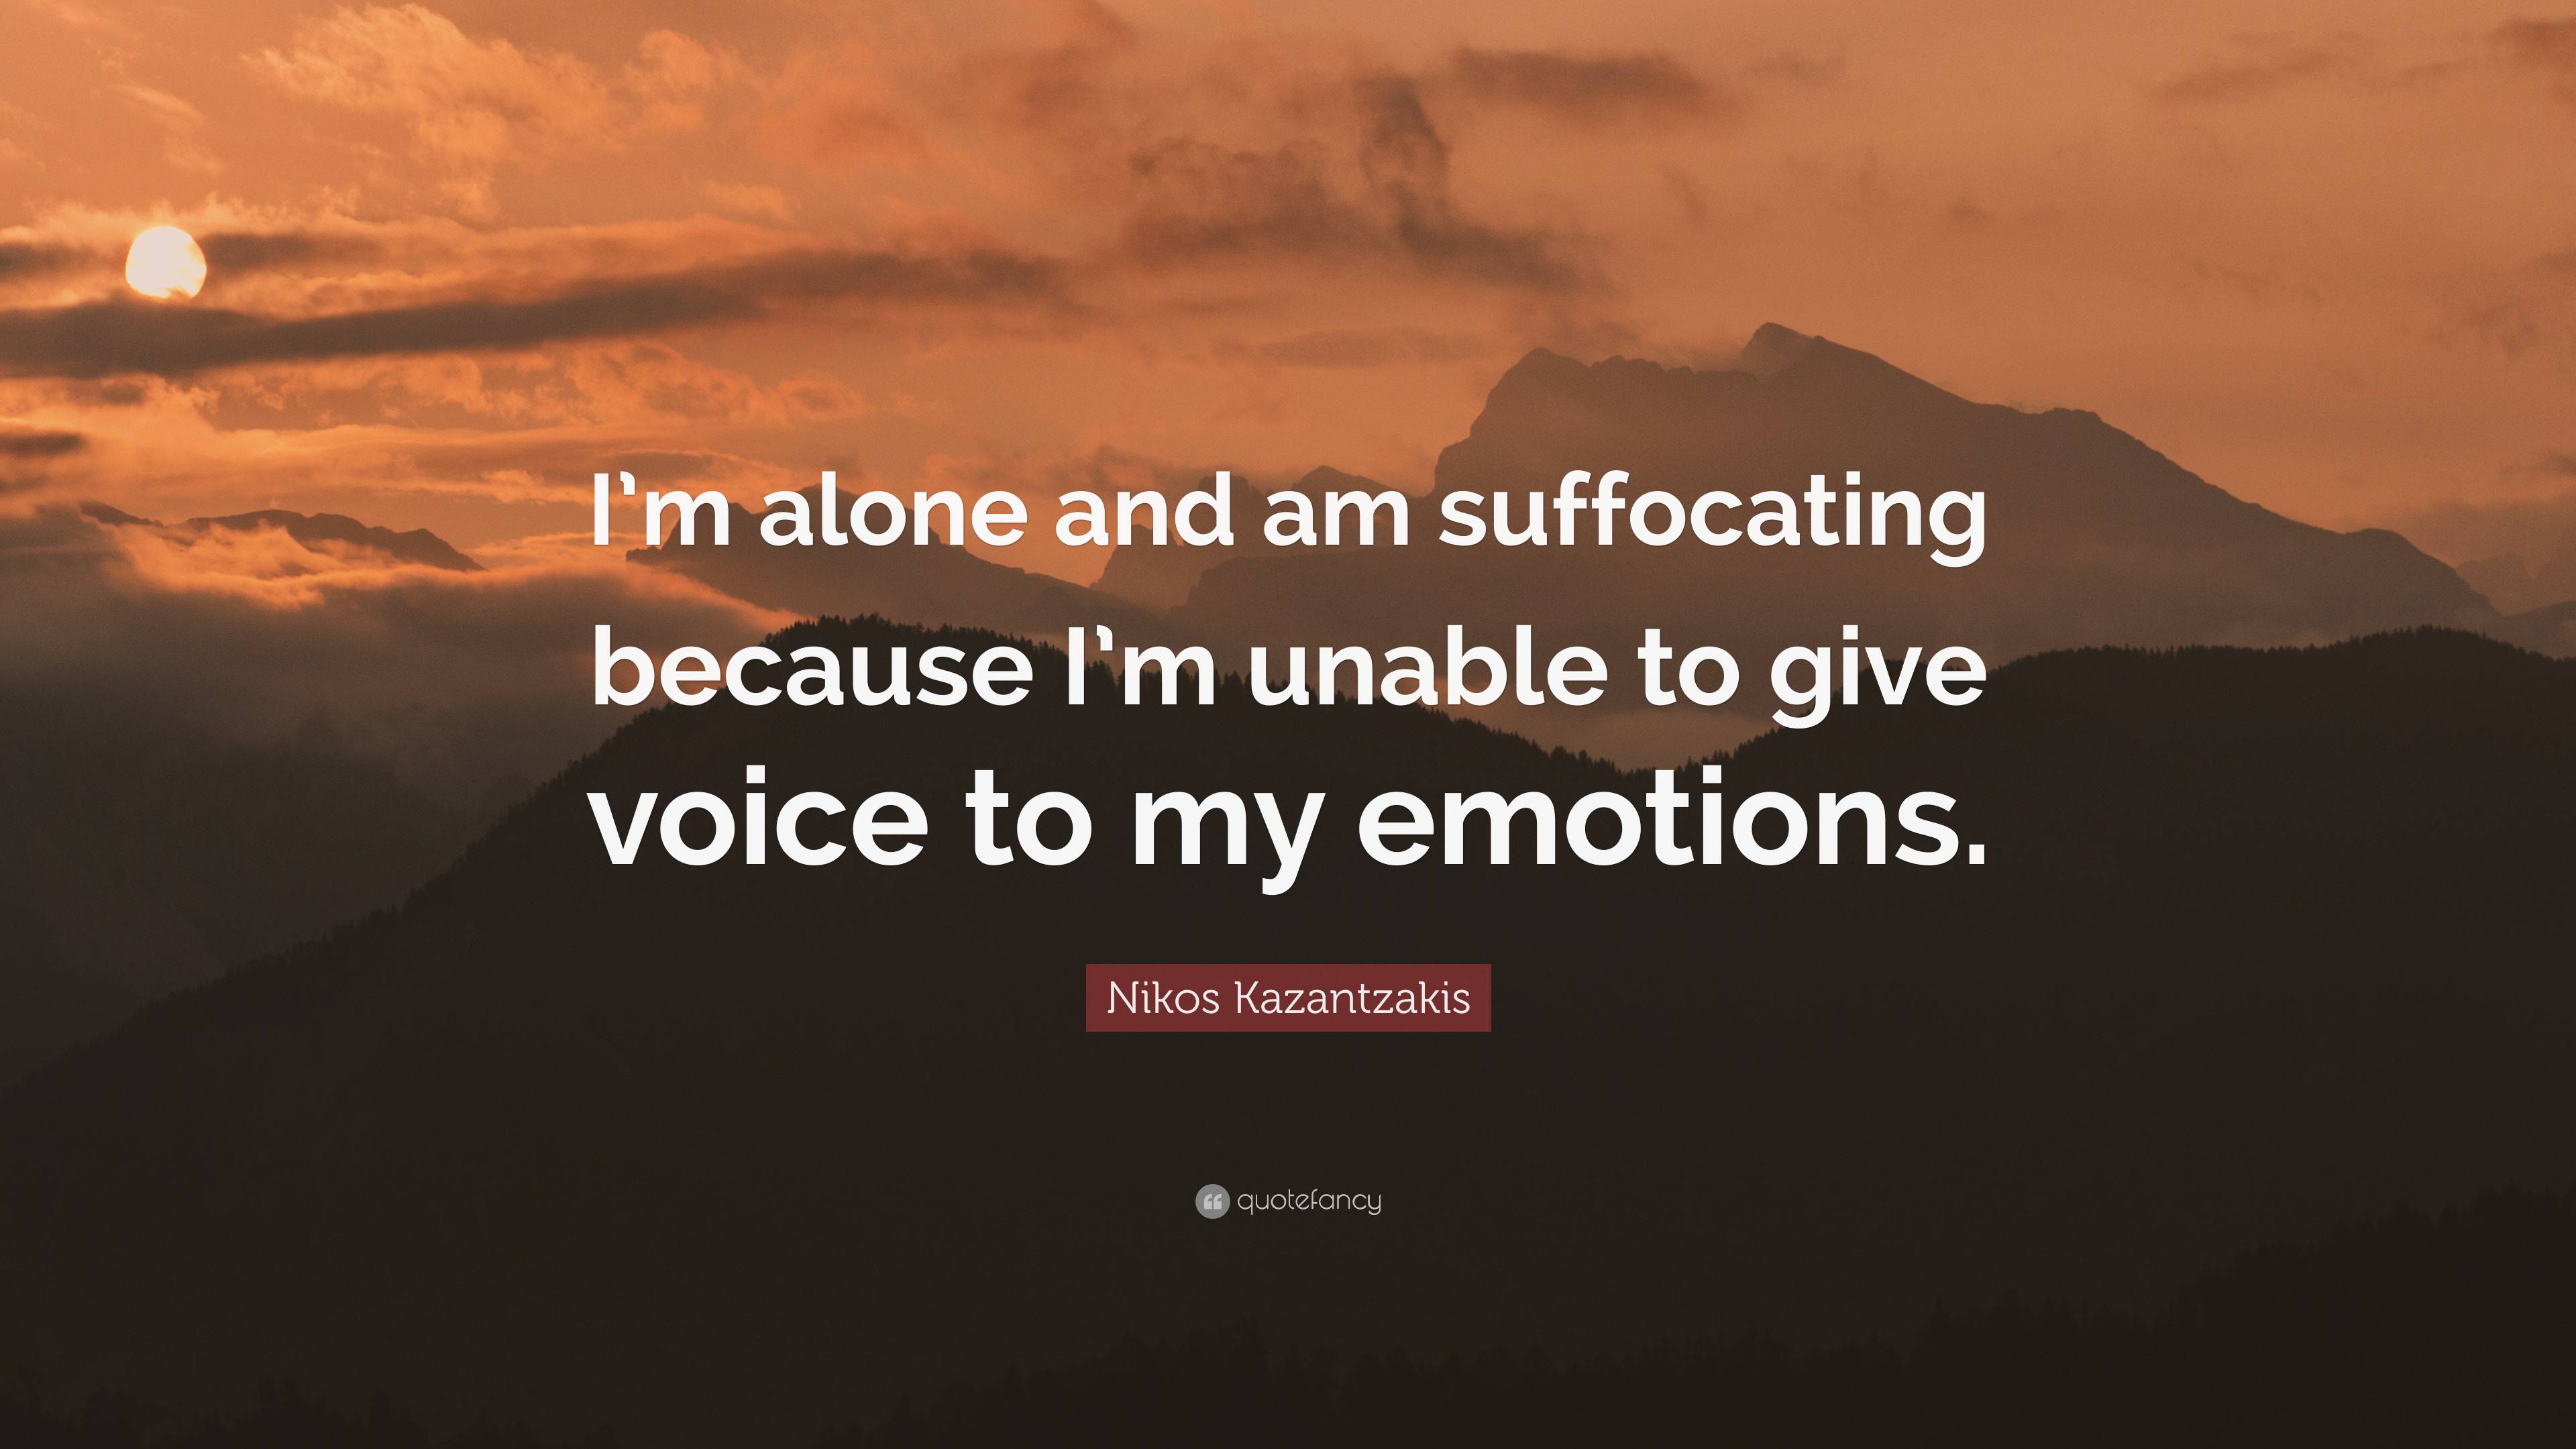 Nikos Kazantzakis Quote: “I’m alone and am suffocating because I’m ...